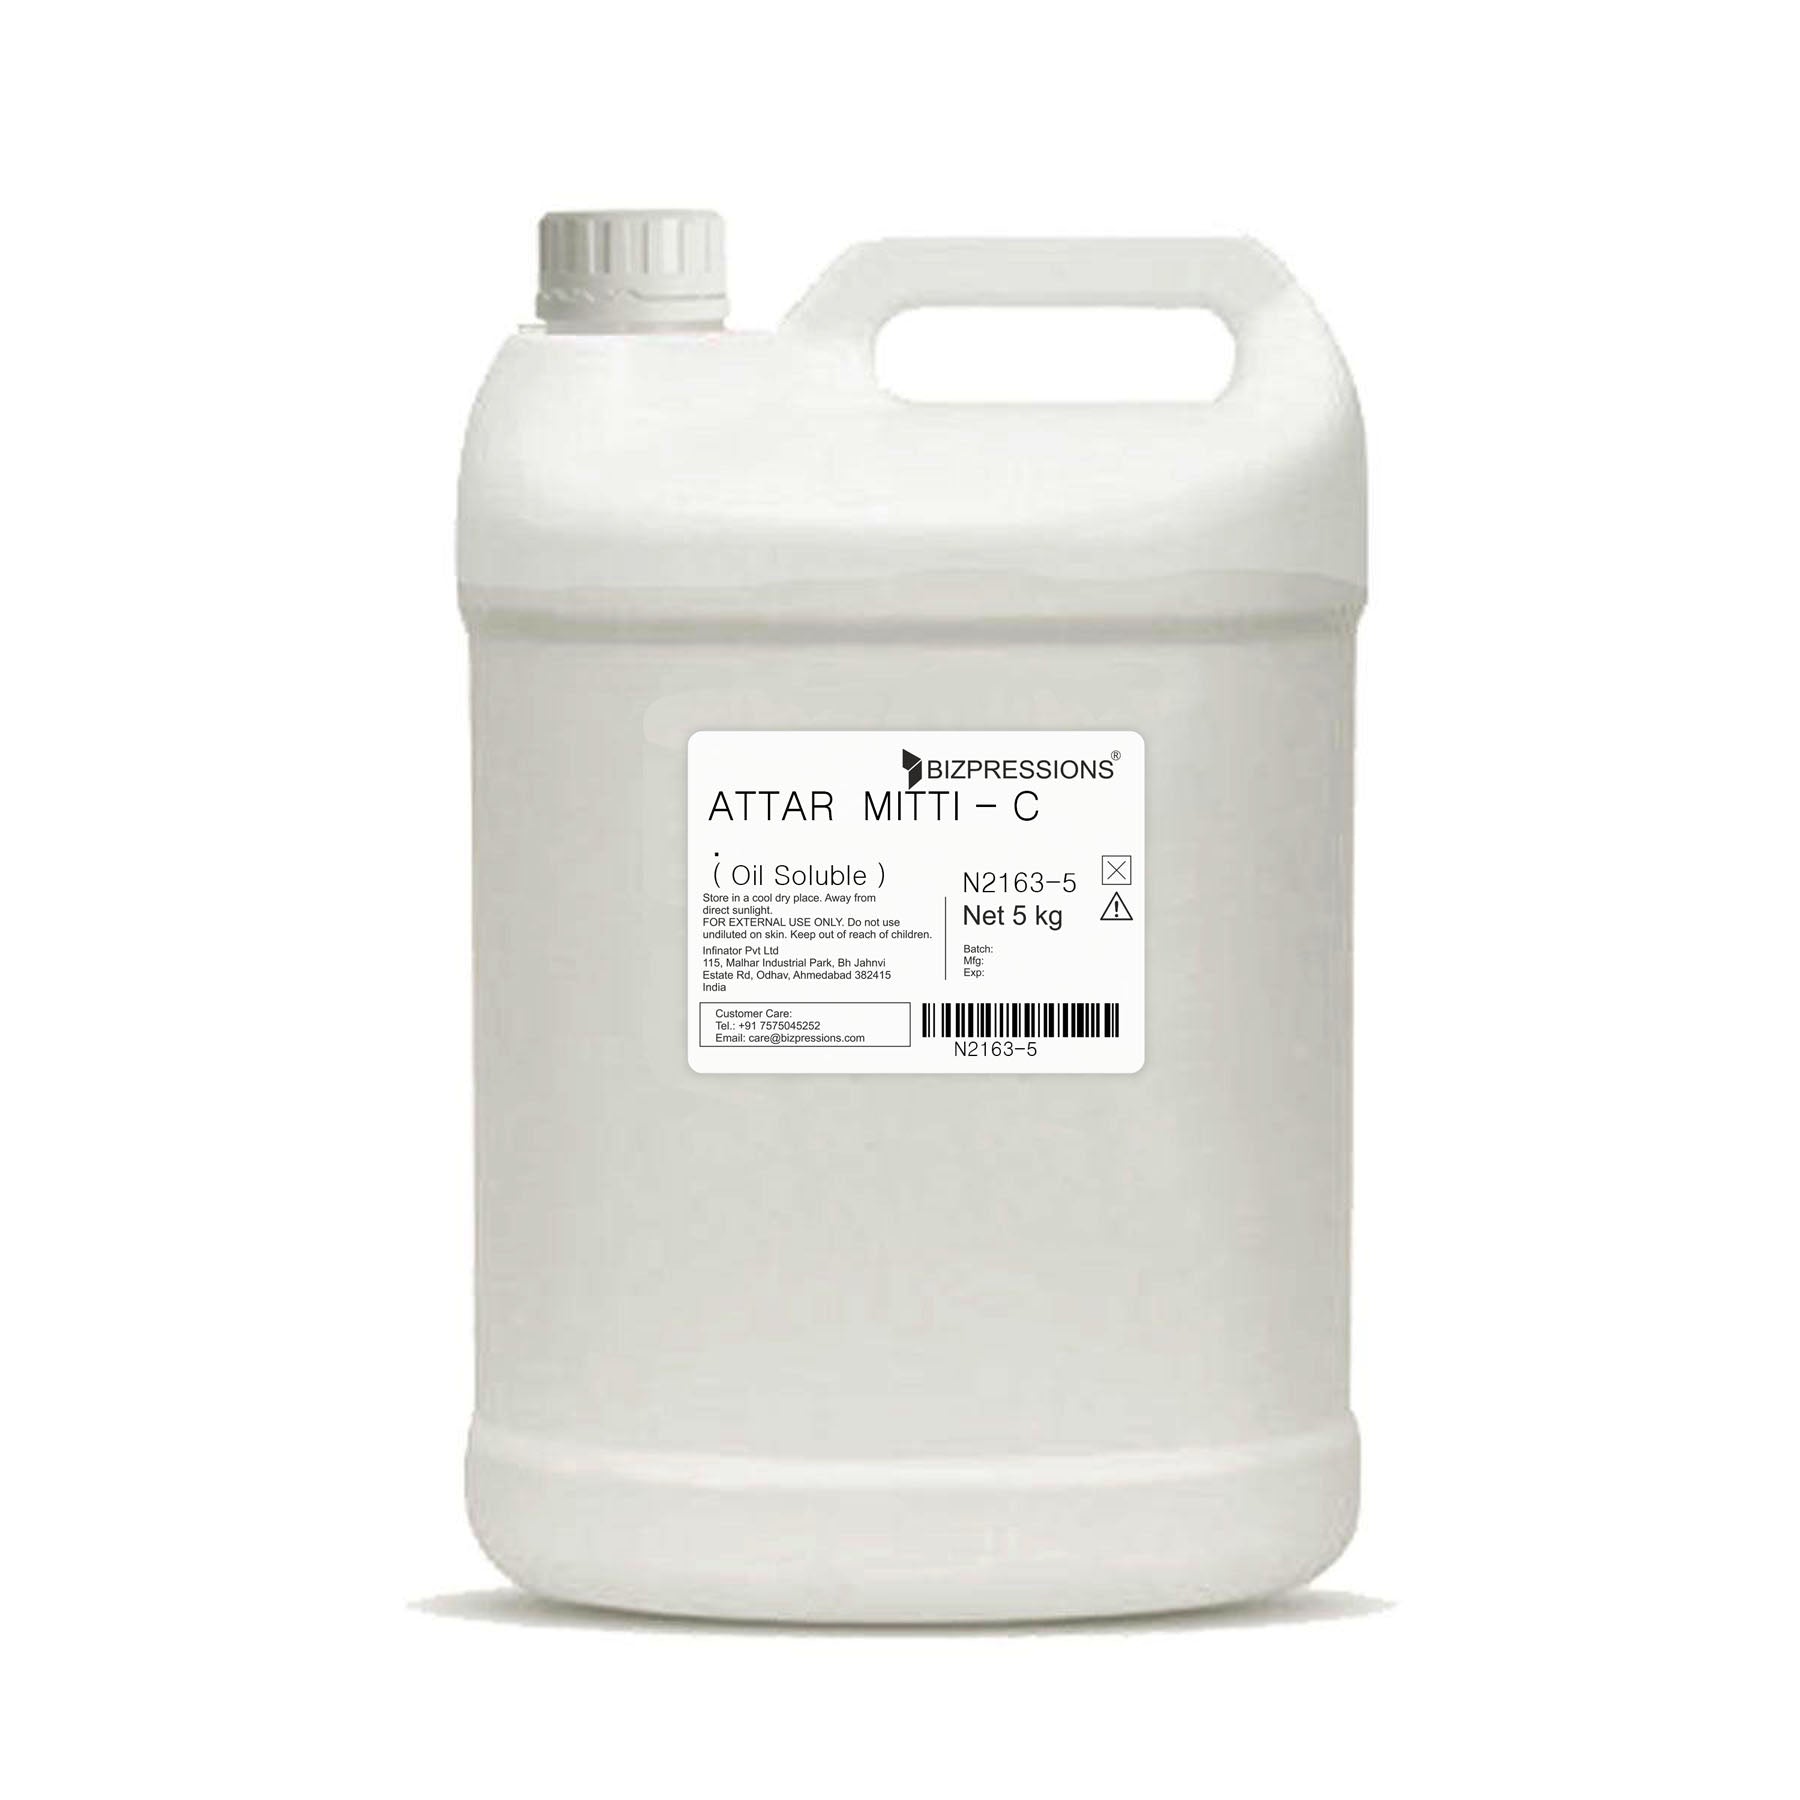 ATTAR MITTI - C - Fragrance ( Oil Soluble ) - 5 kg